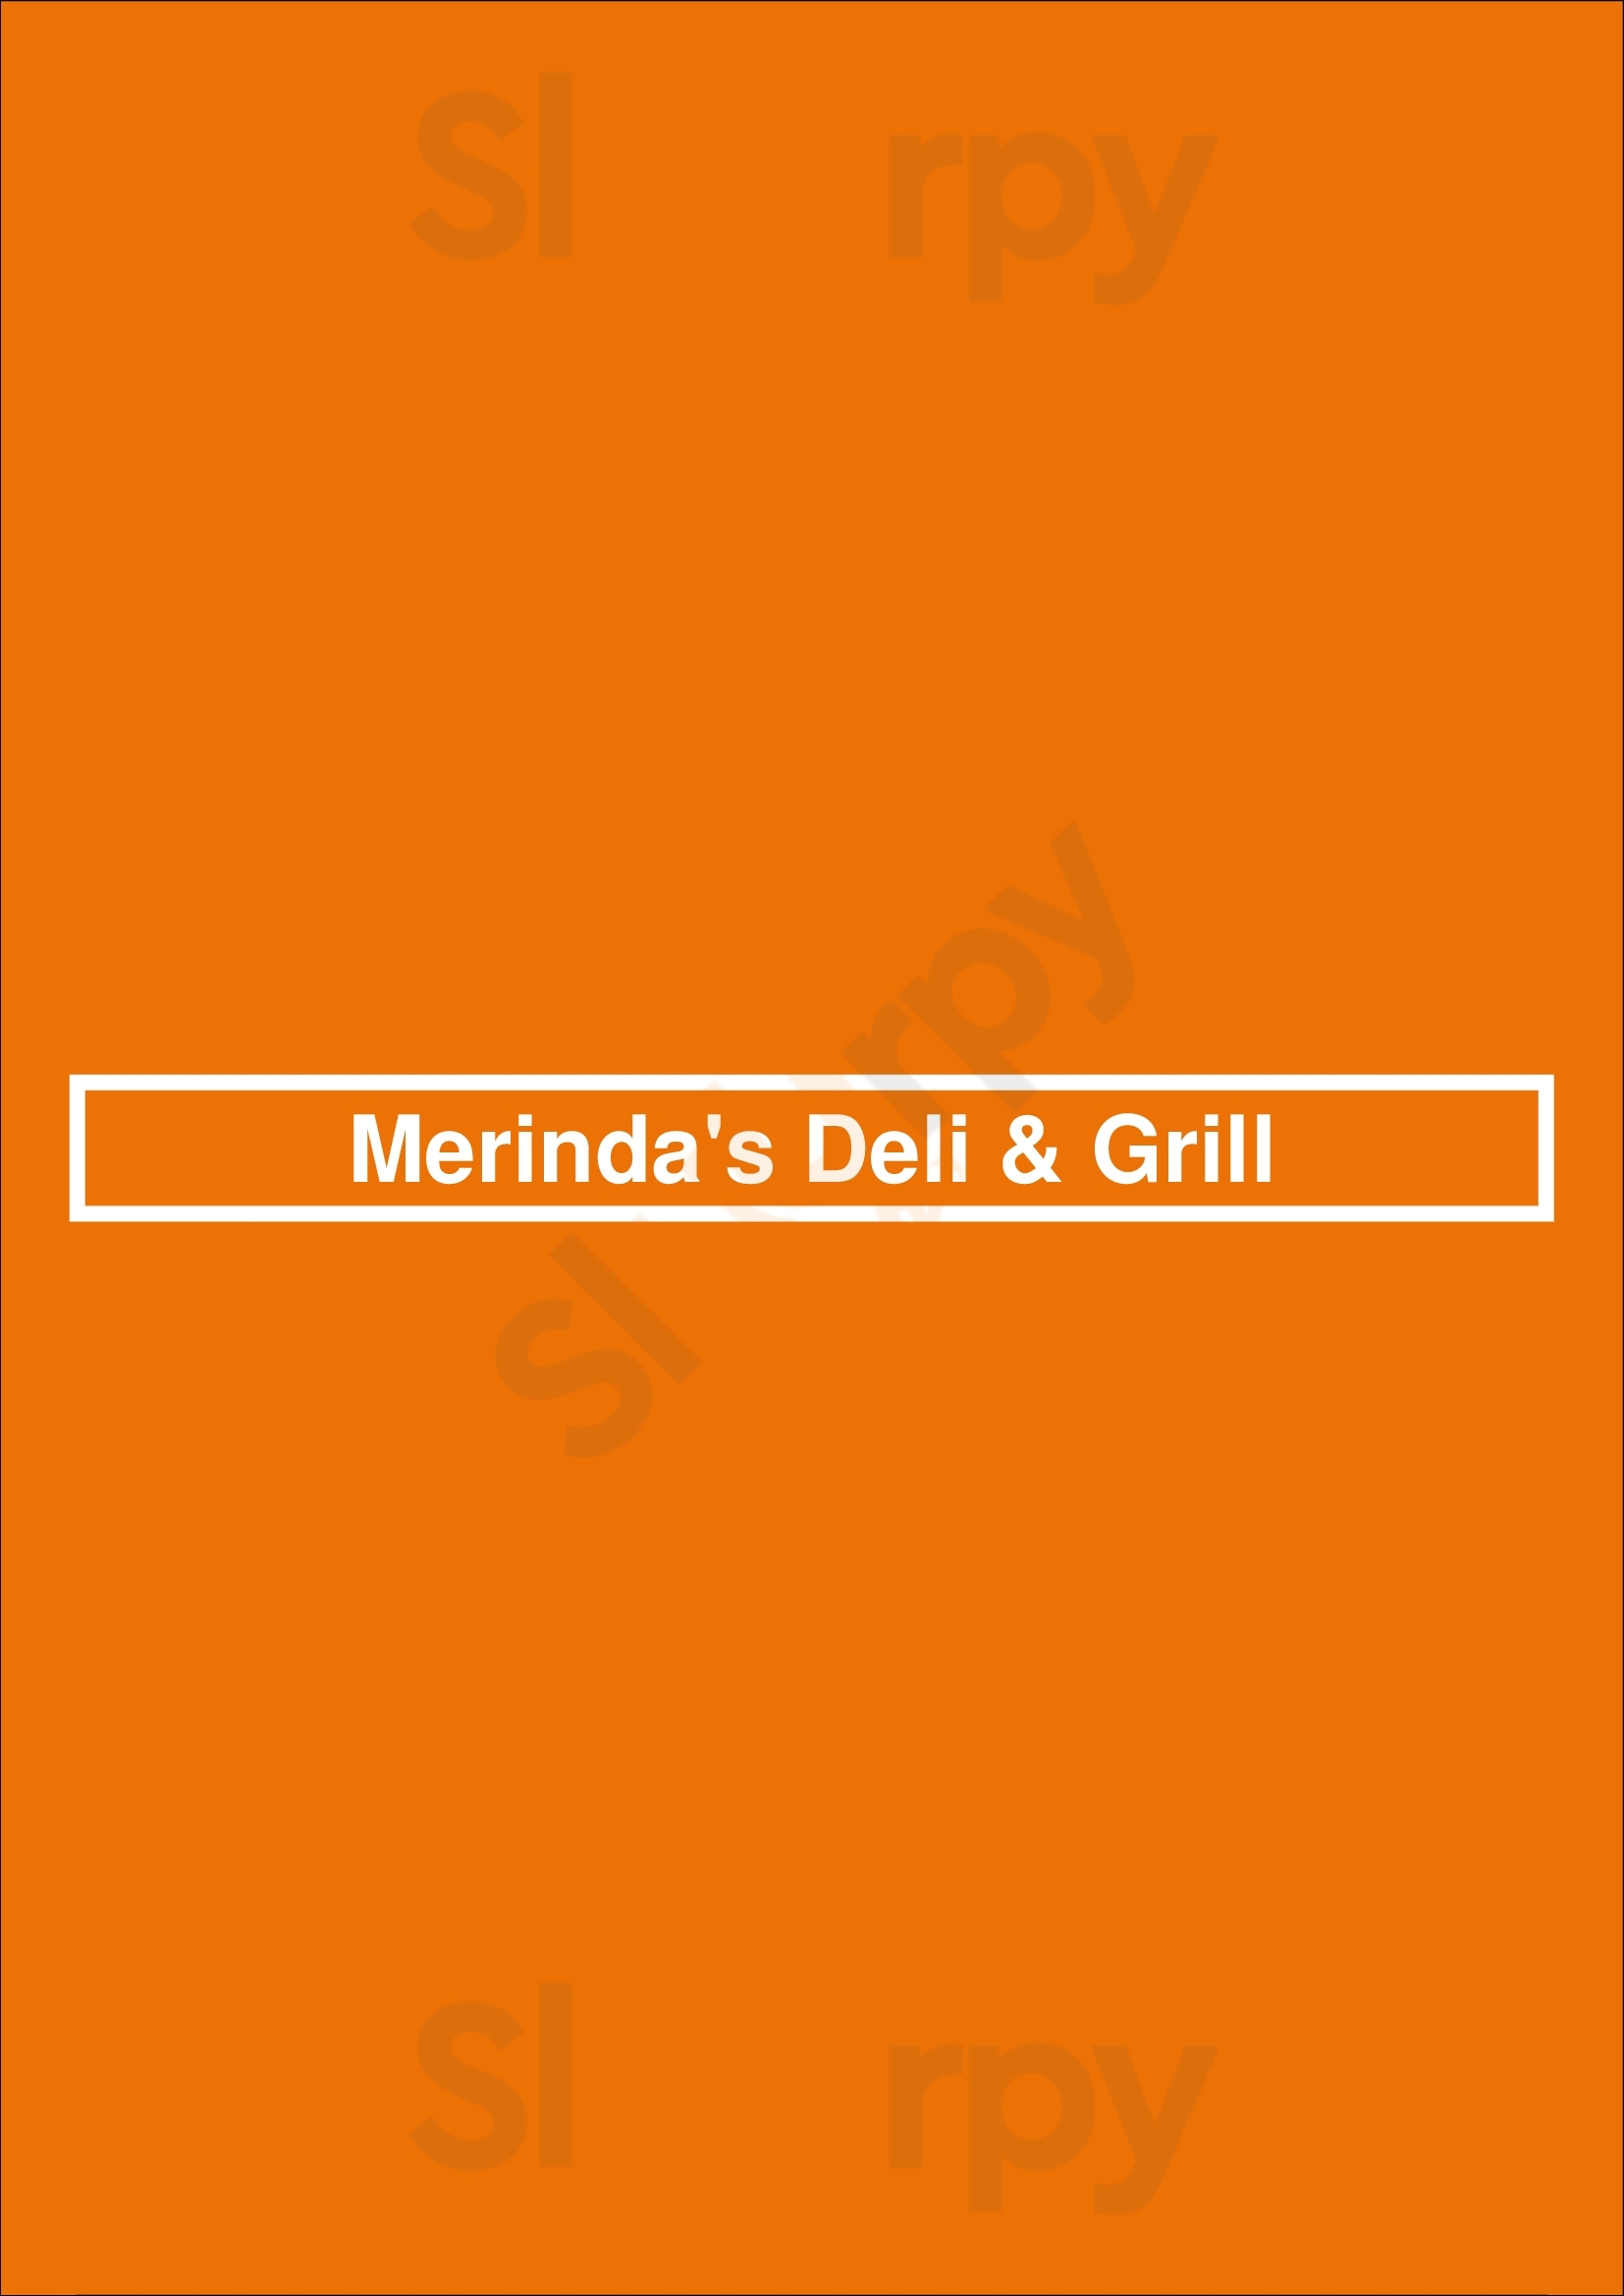 Merinda's Deli & Grill Brooklyn Menu - 1